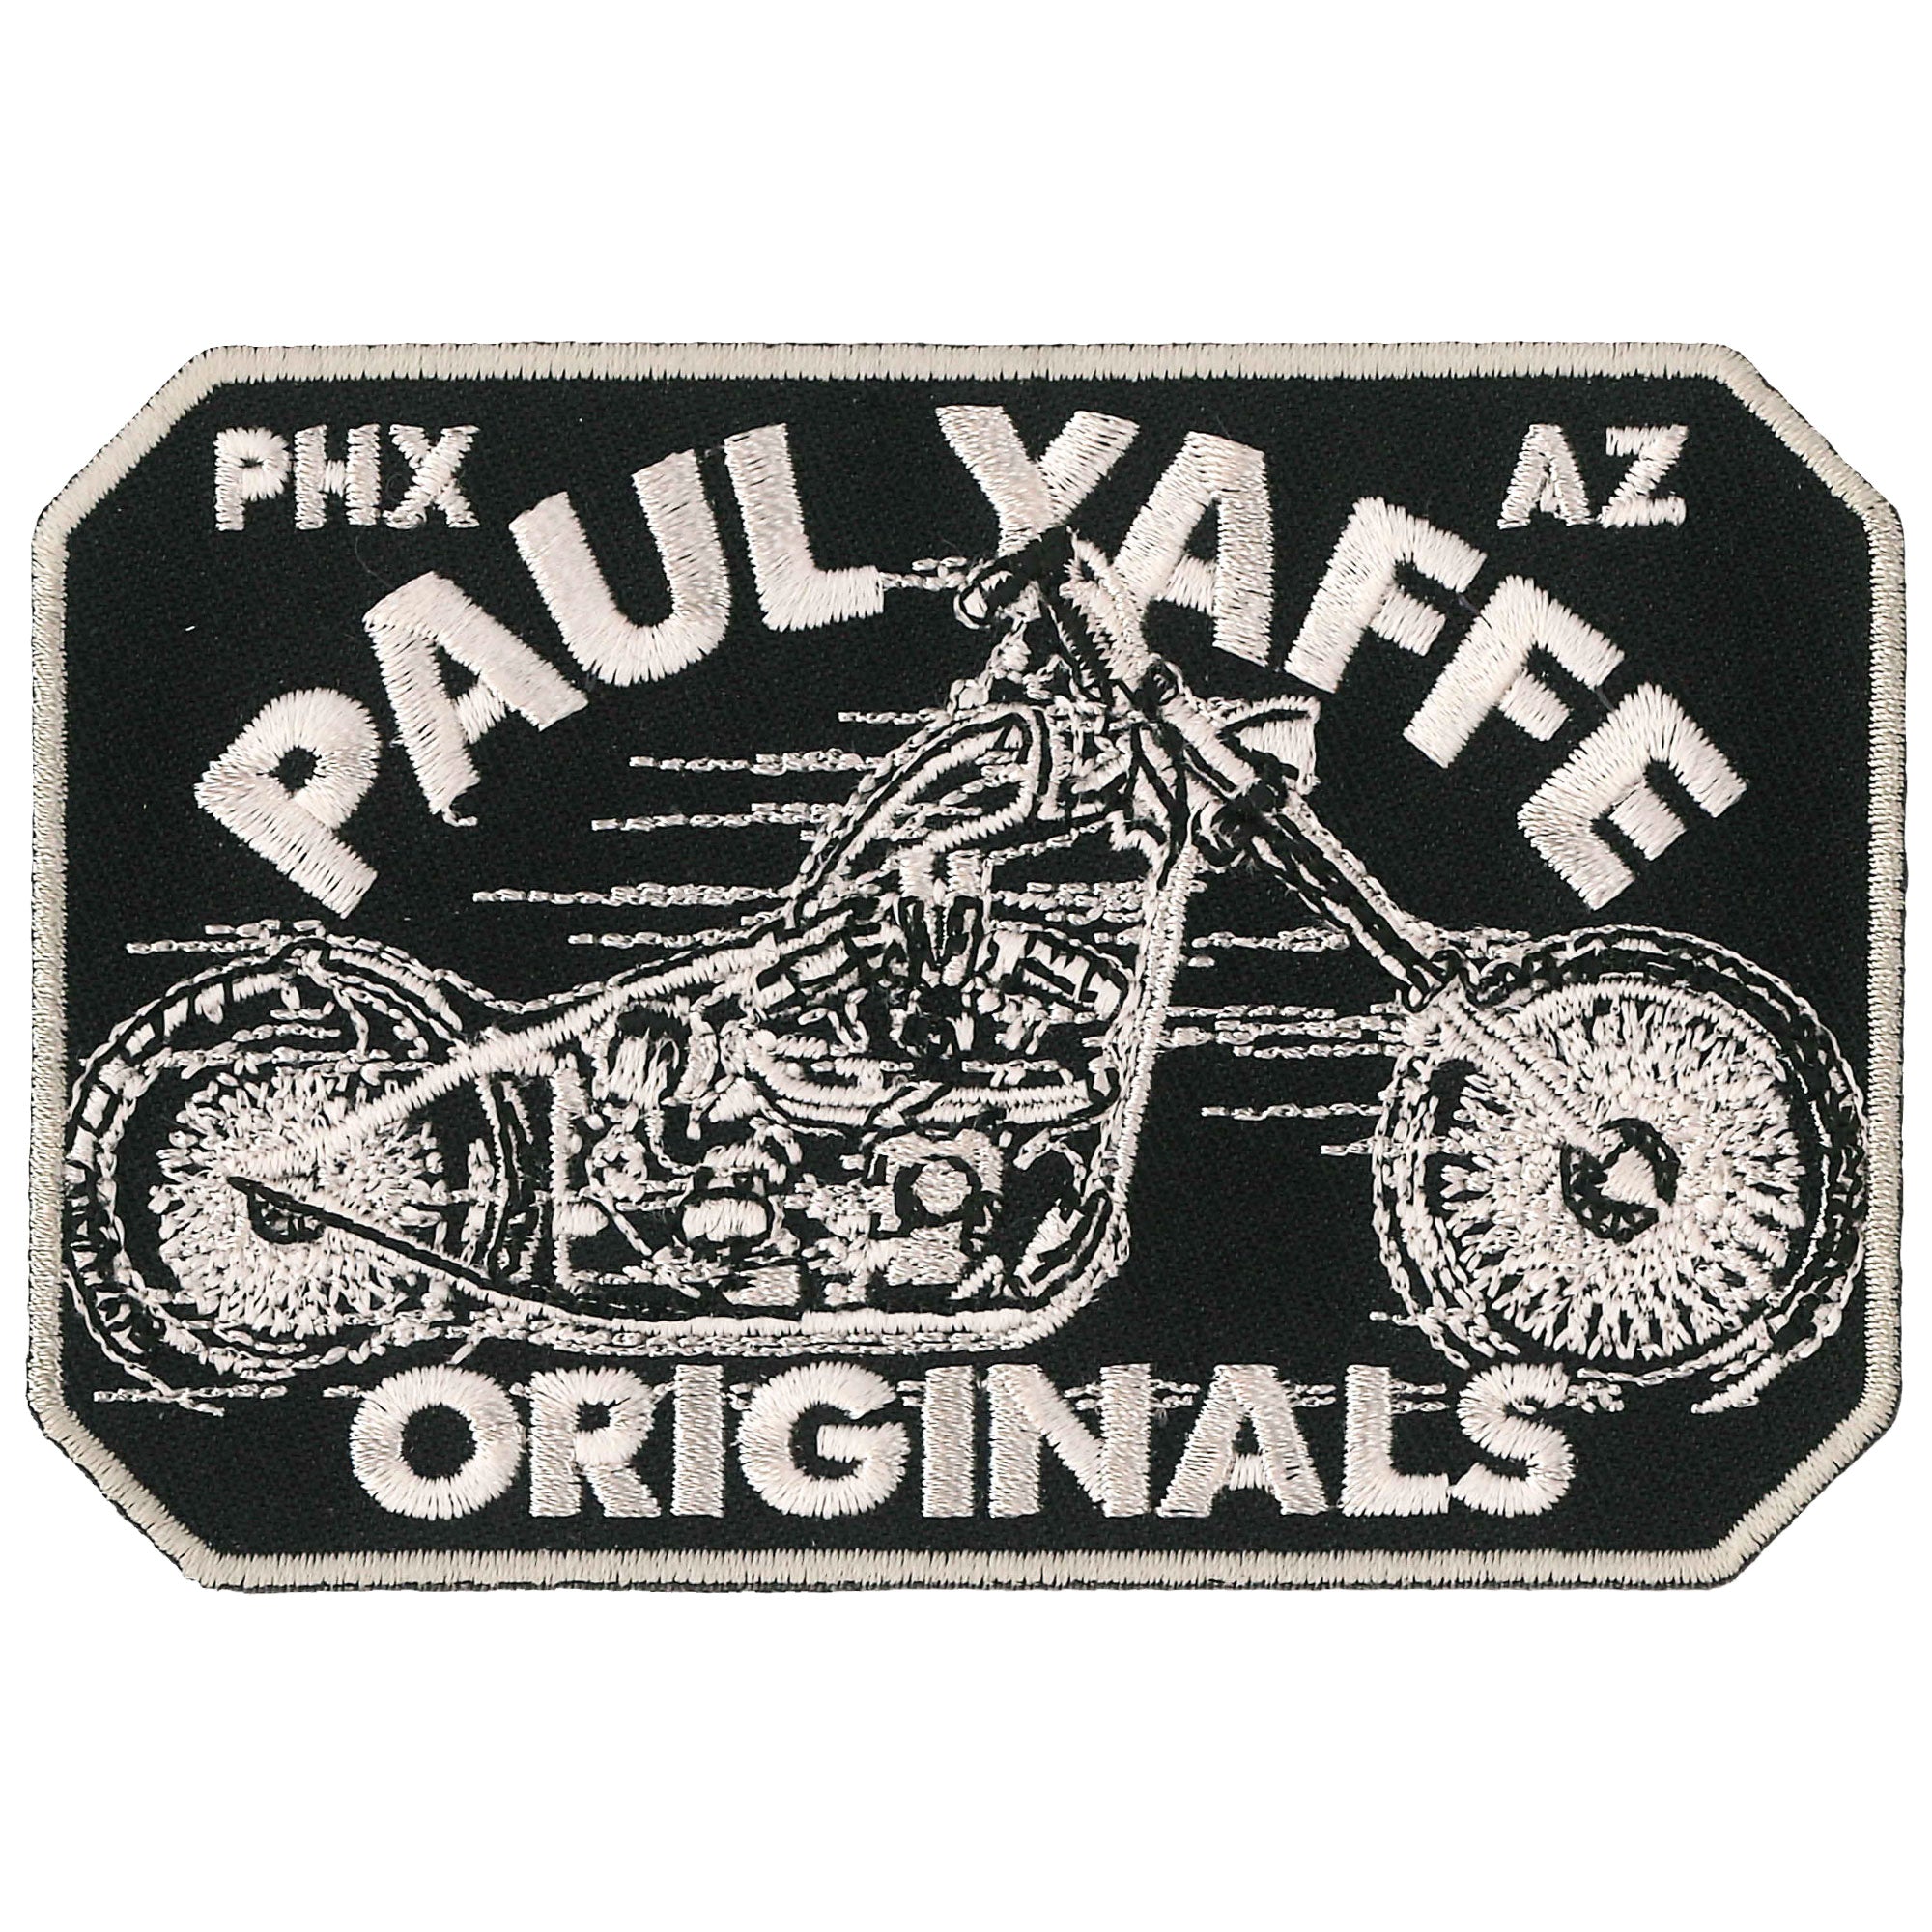 Official Paul Yaffe's El Cadiente Patch